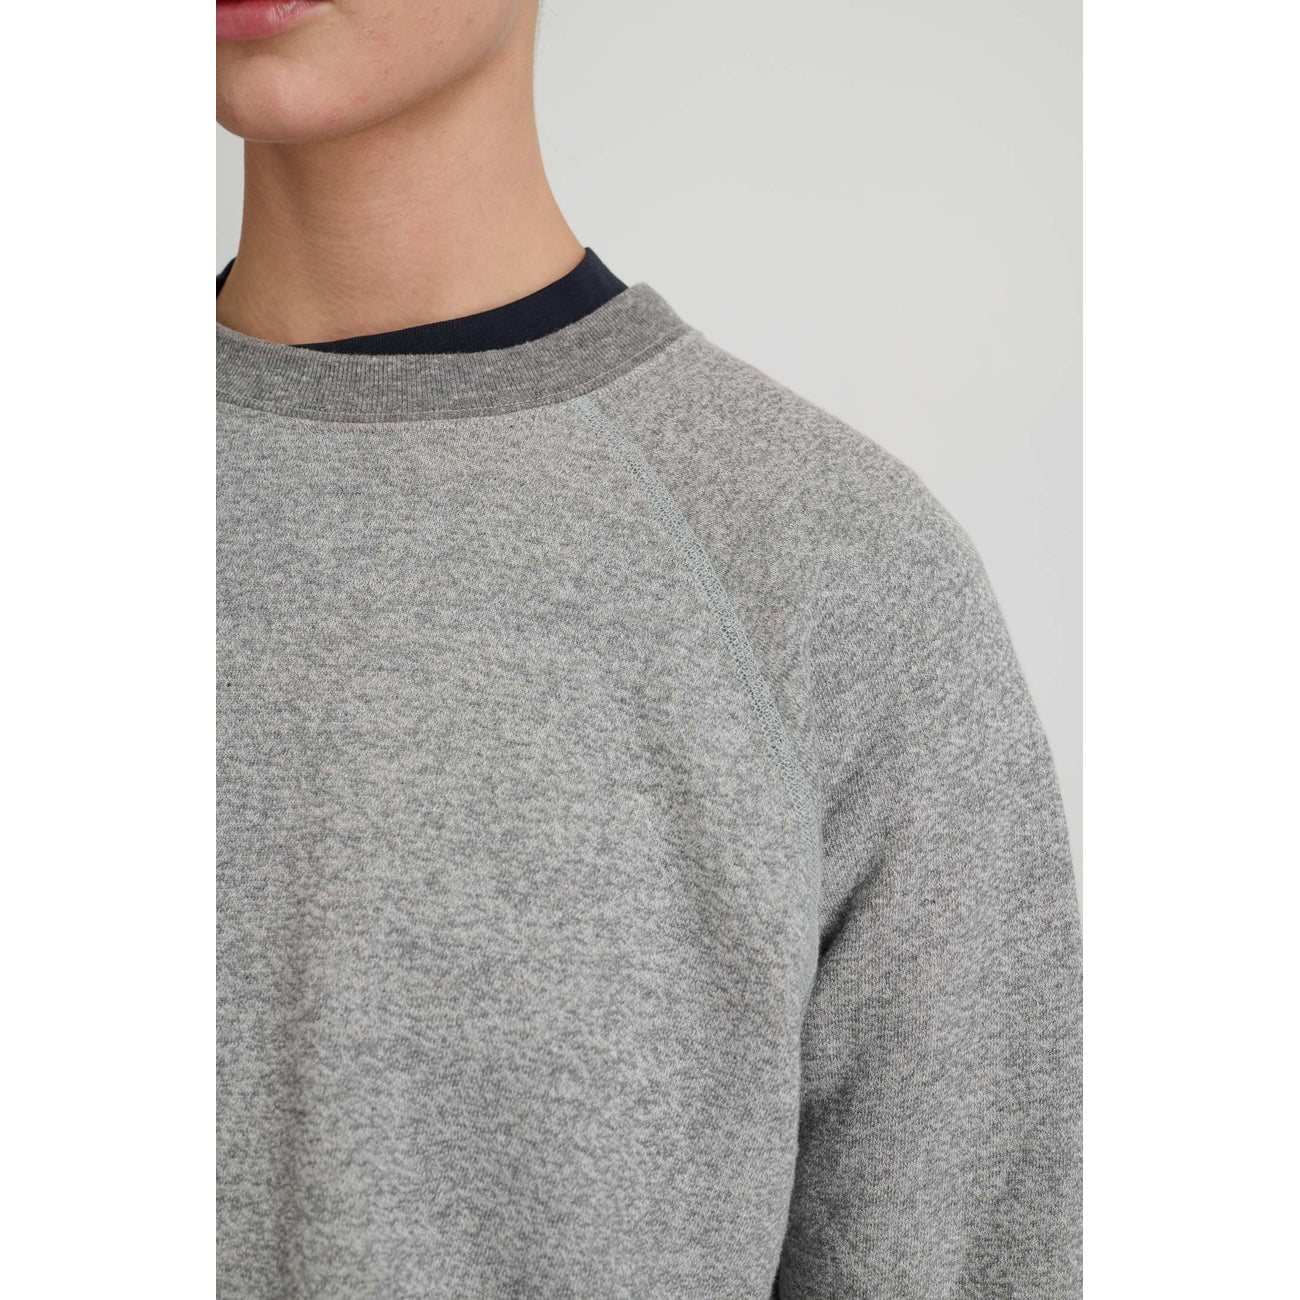 sweatshirt in grey heather